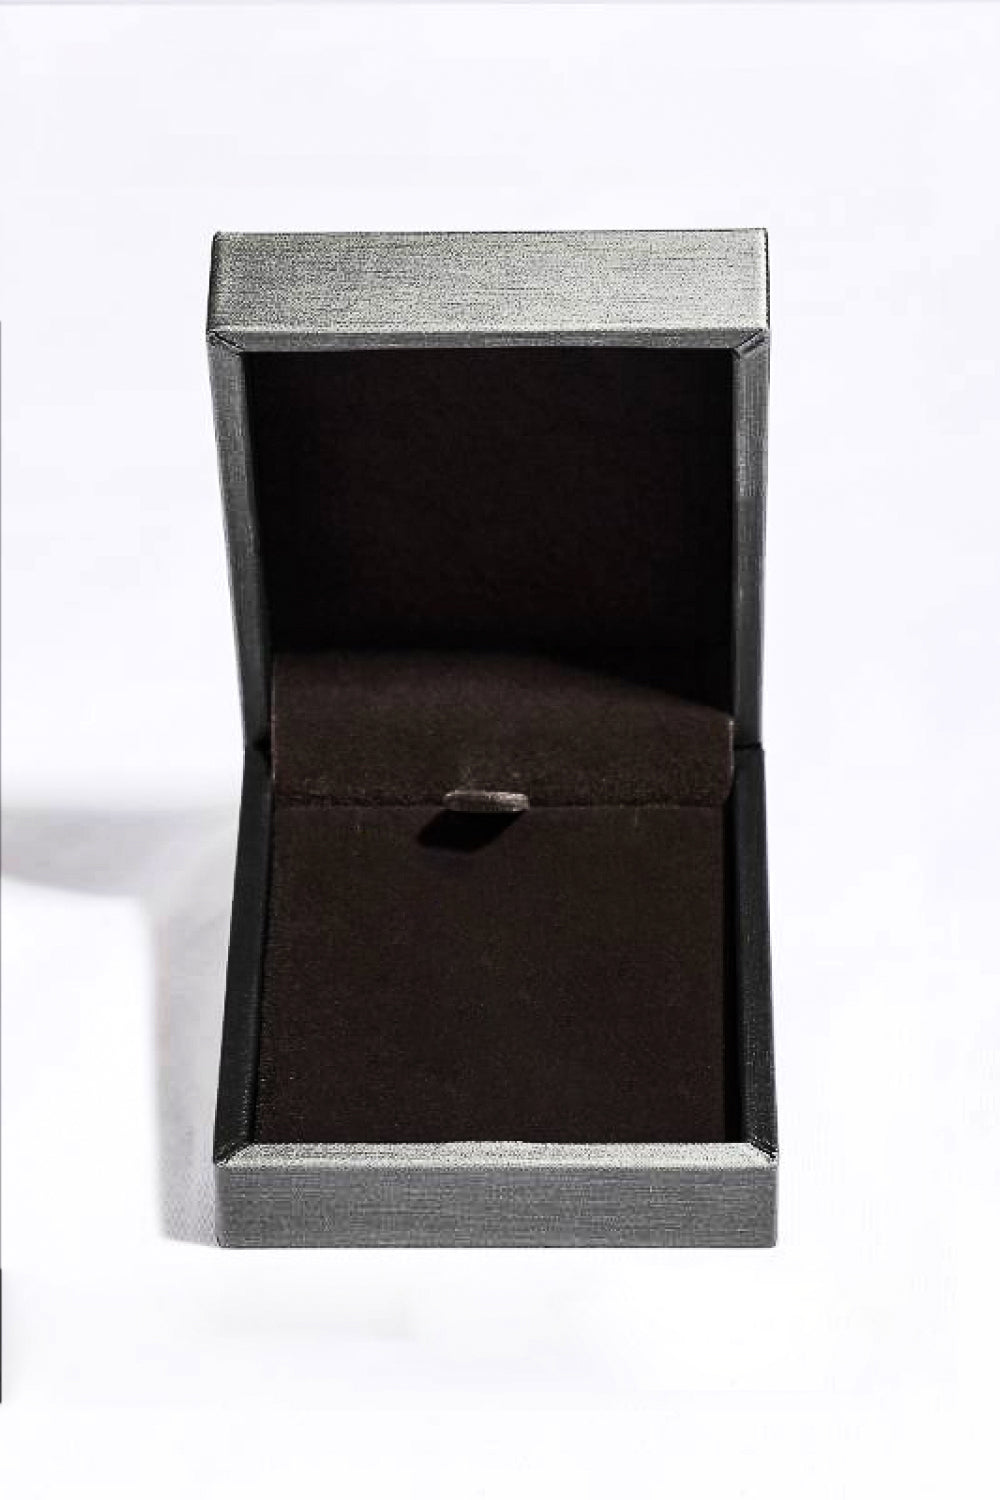 Moissanite 925 Sterling Silver Bracelet - Tophatter Deals